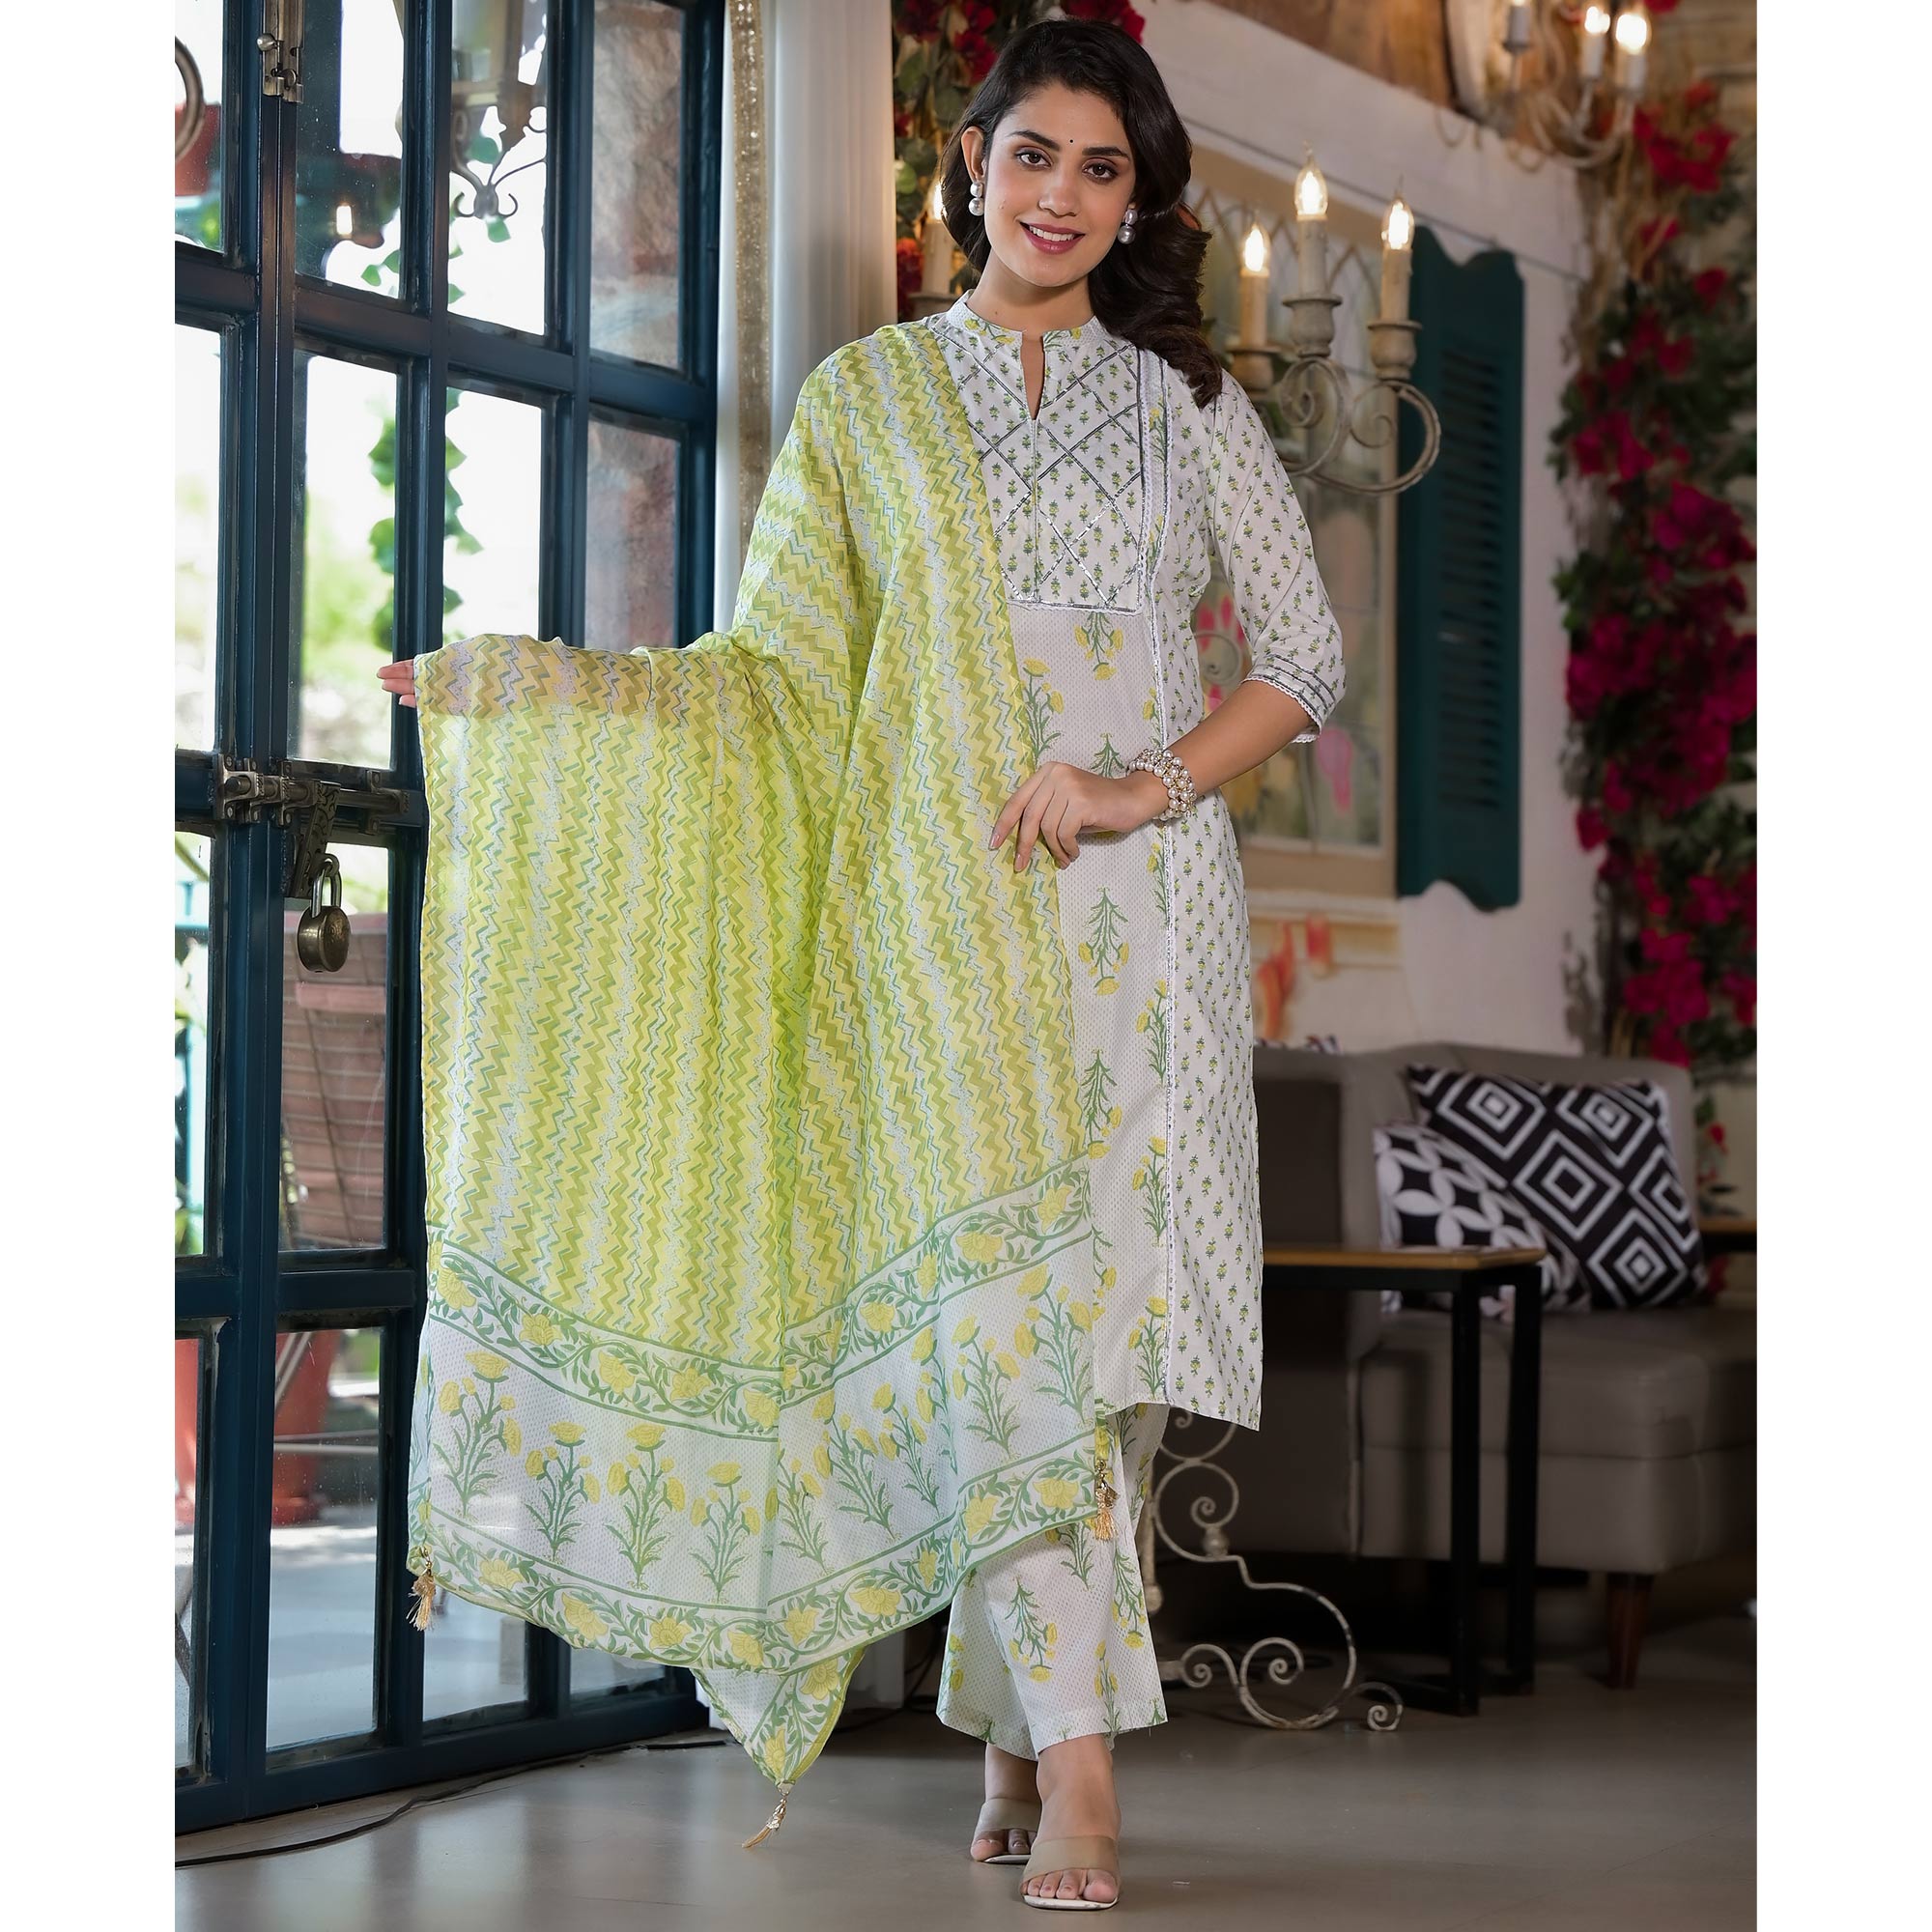 White & Lemon Yellow Floral Printed Pure Cotton Salwar Suit